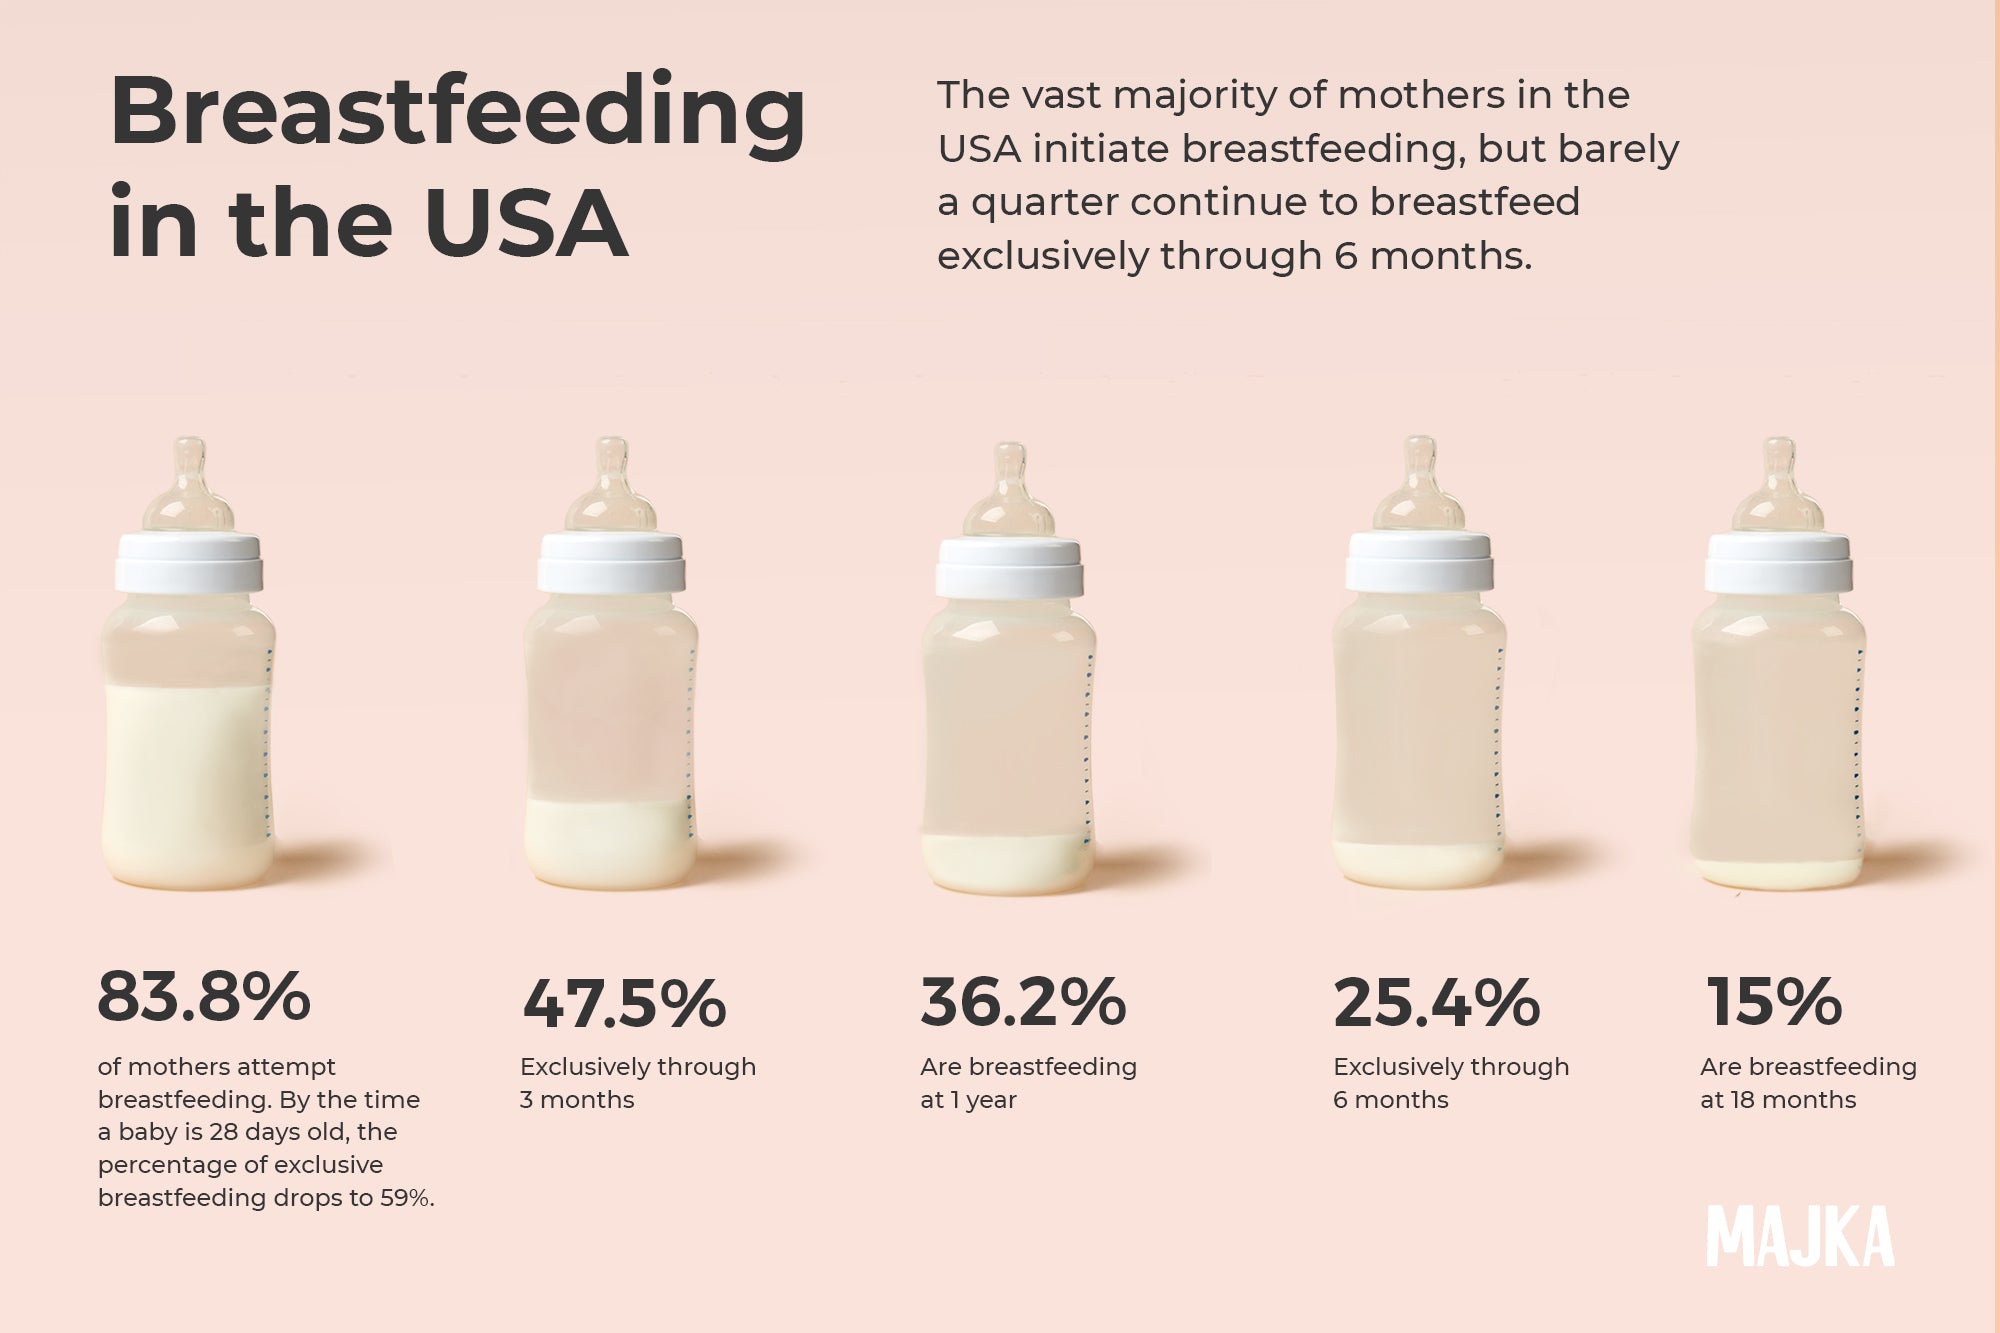 Breastfeeding in the USA